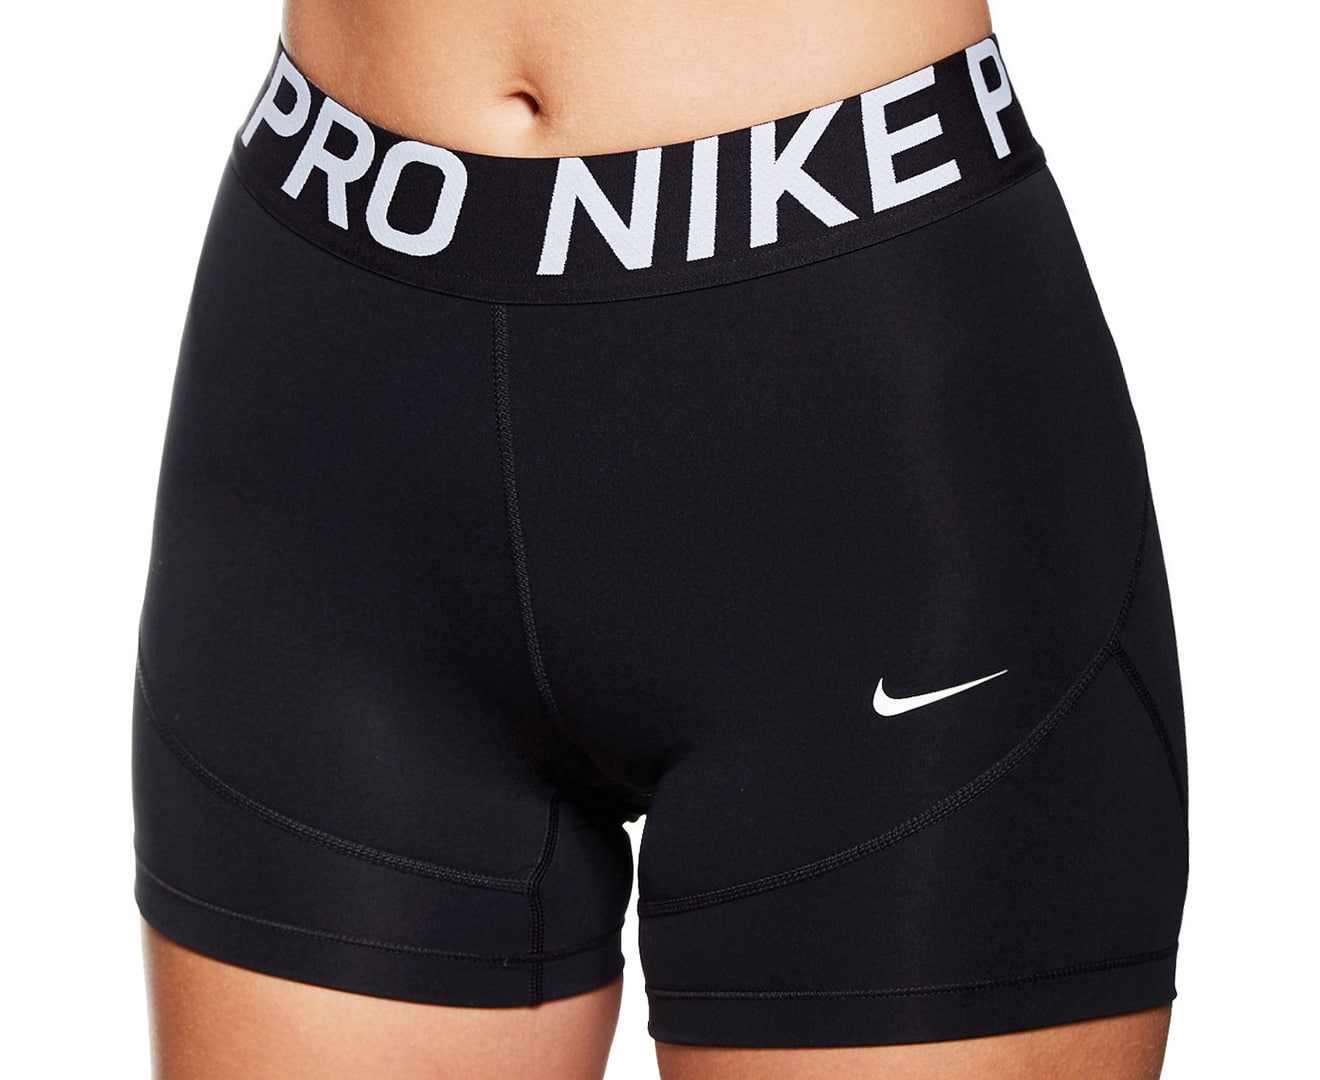 Nike pros Blog 1